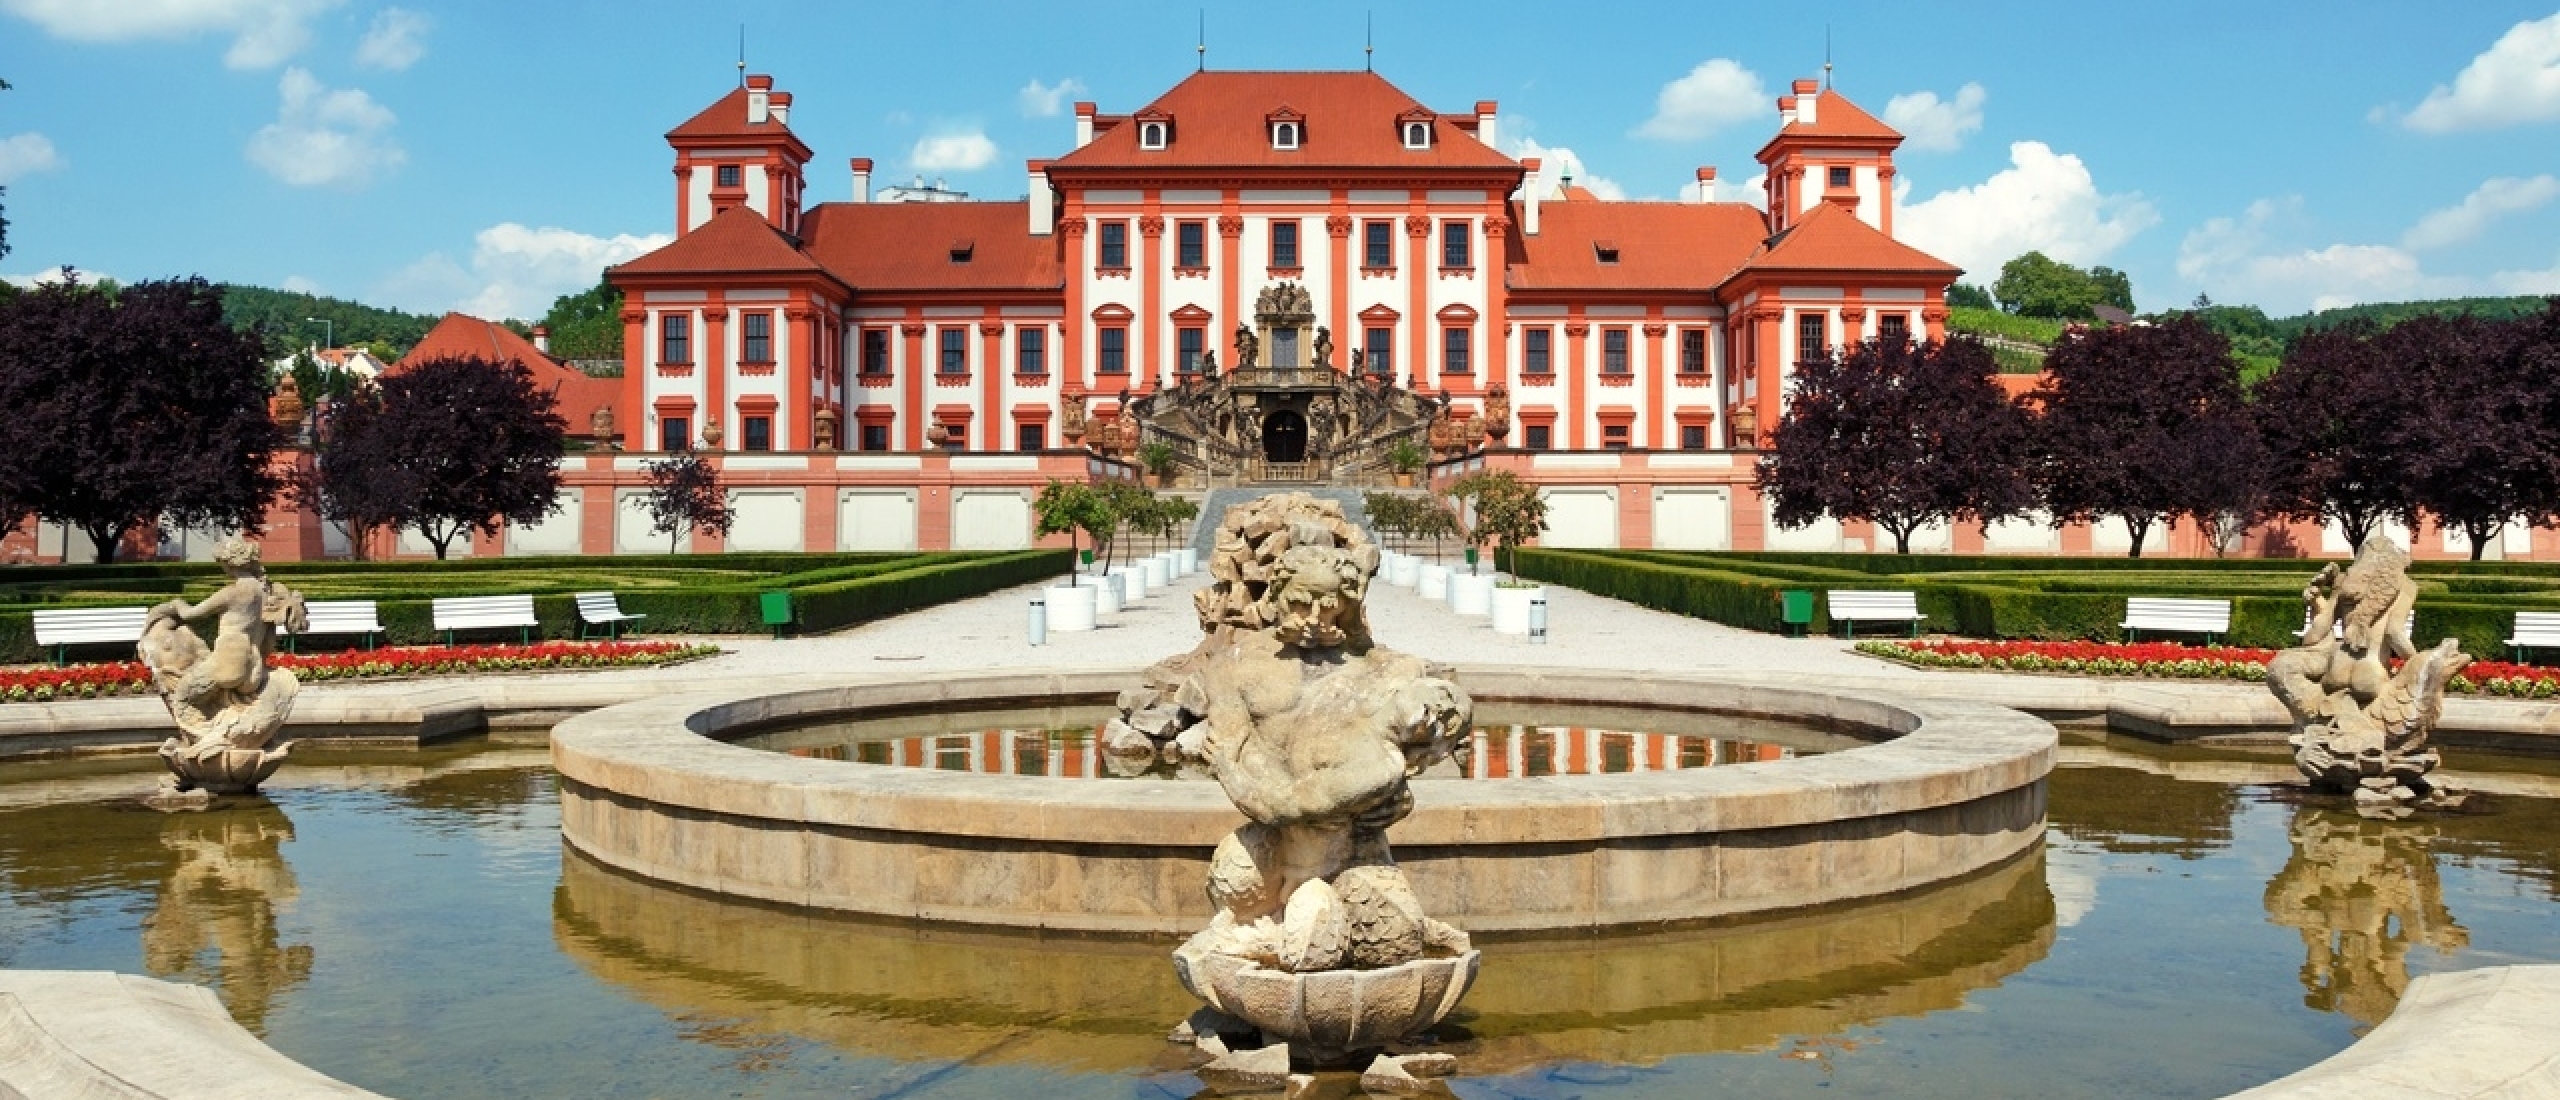 Tsjechië | Het land van kastelen